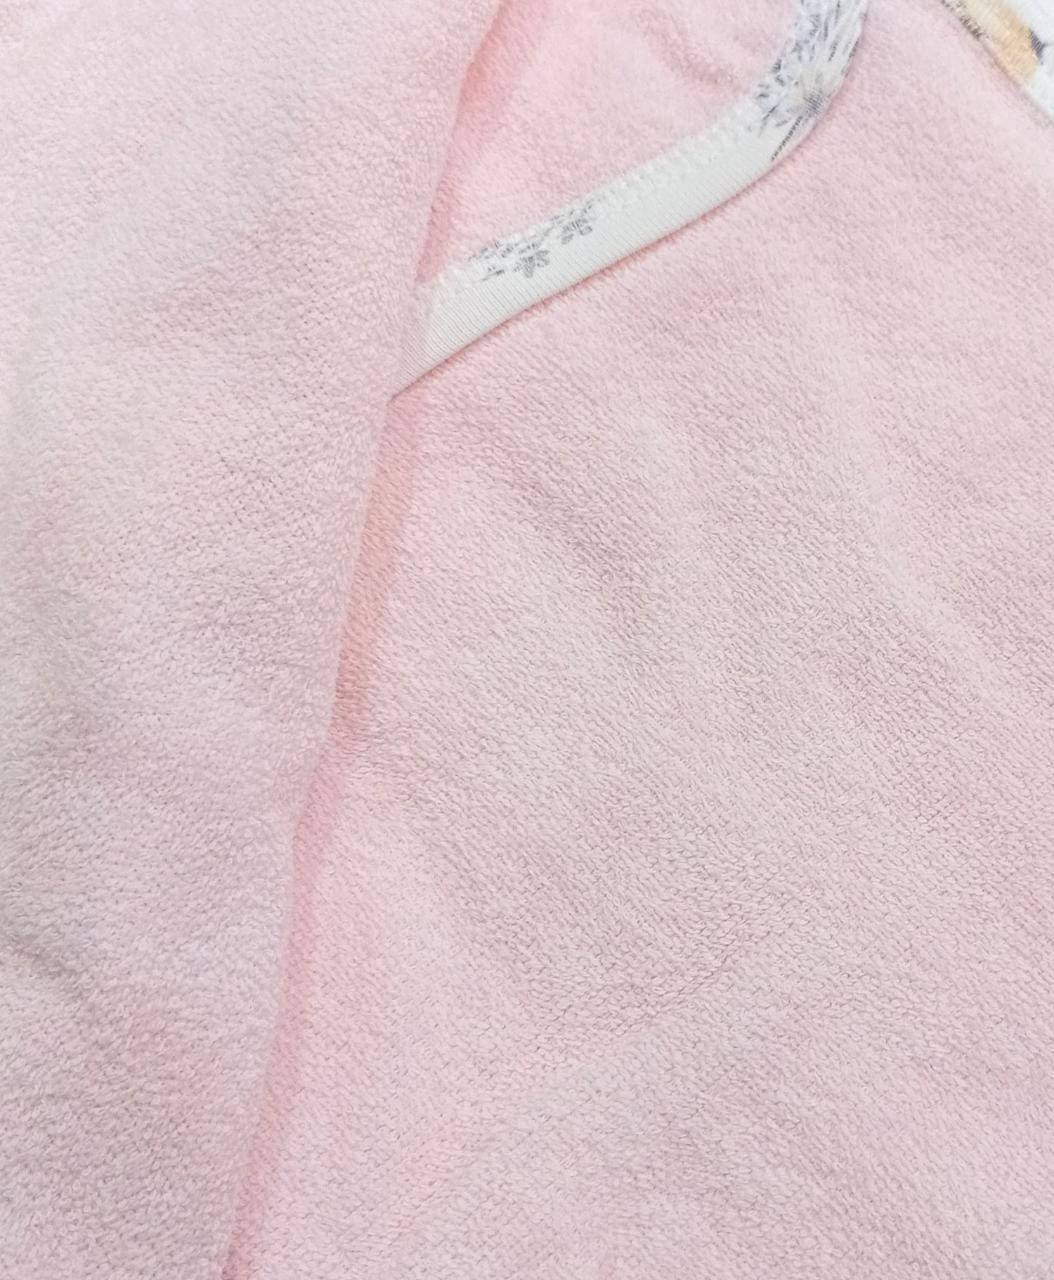 Towel Set/Floral Bath Towel/Pink